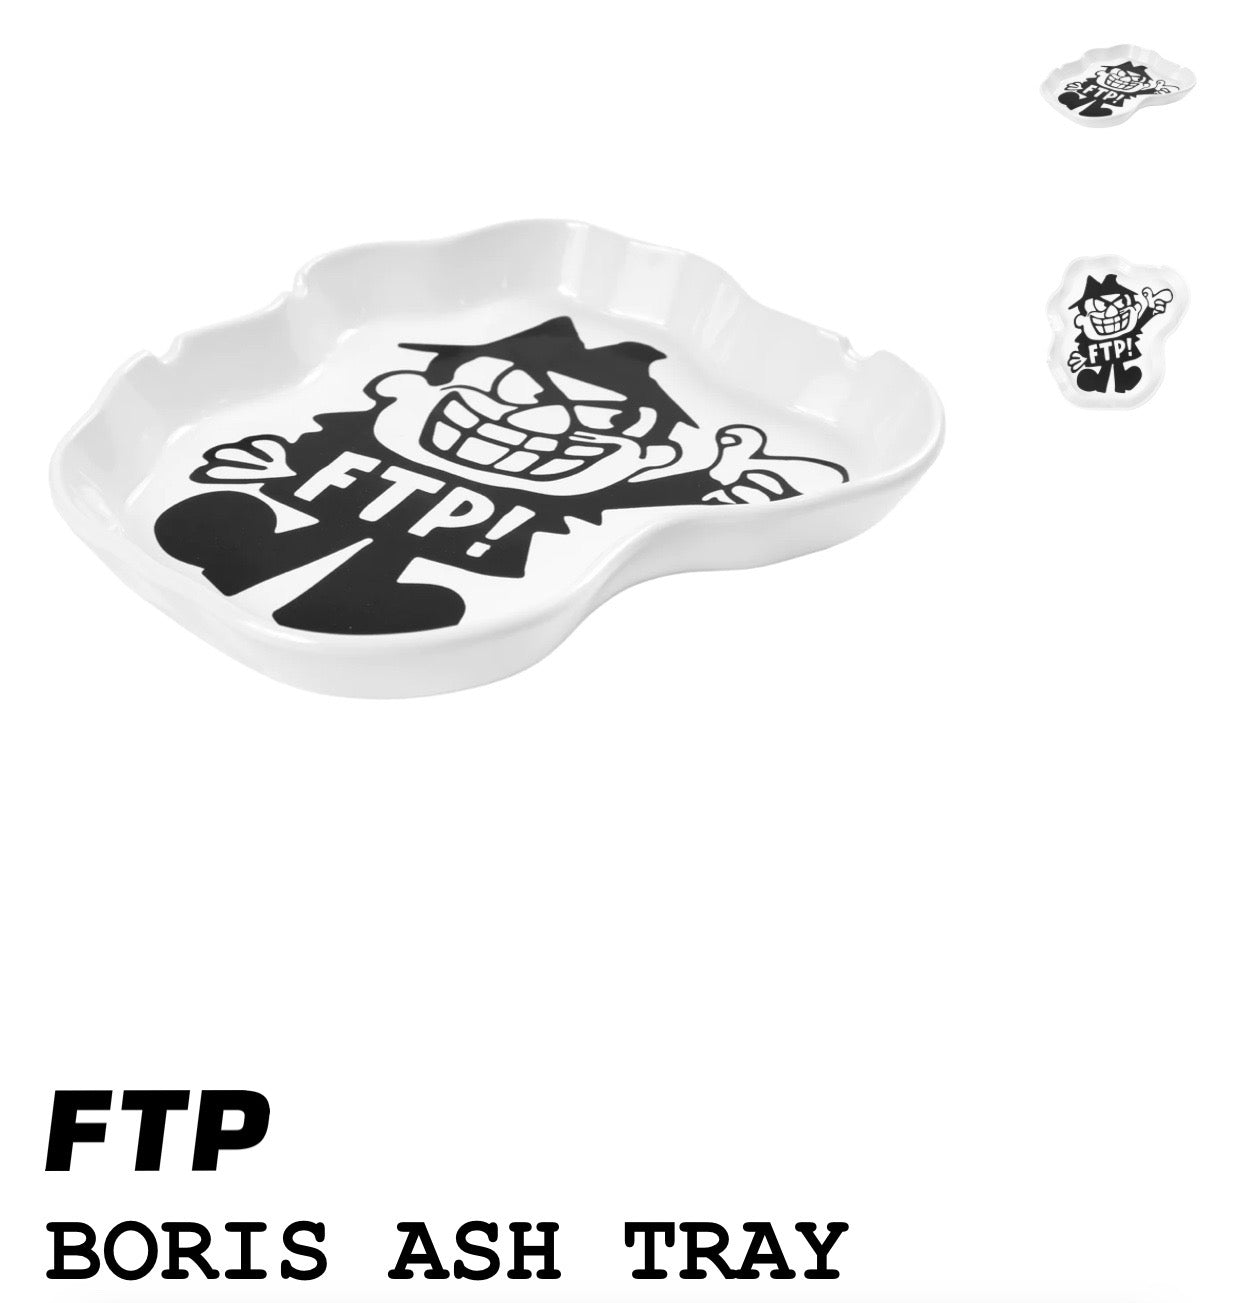 Boris Ash Tray